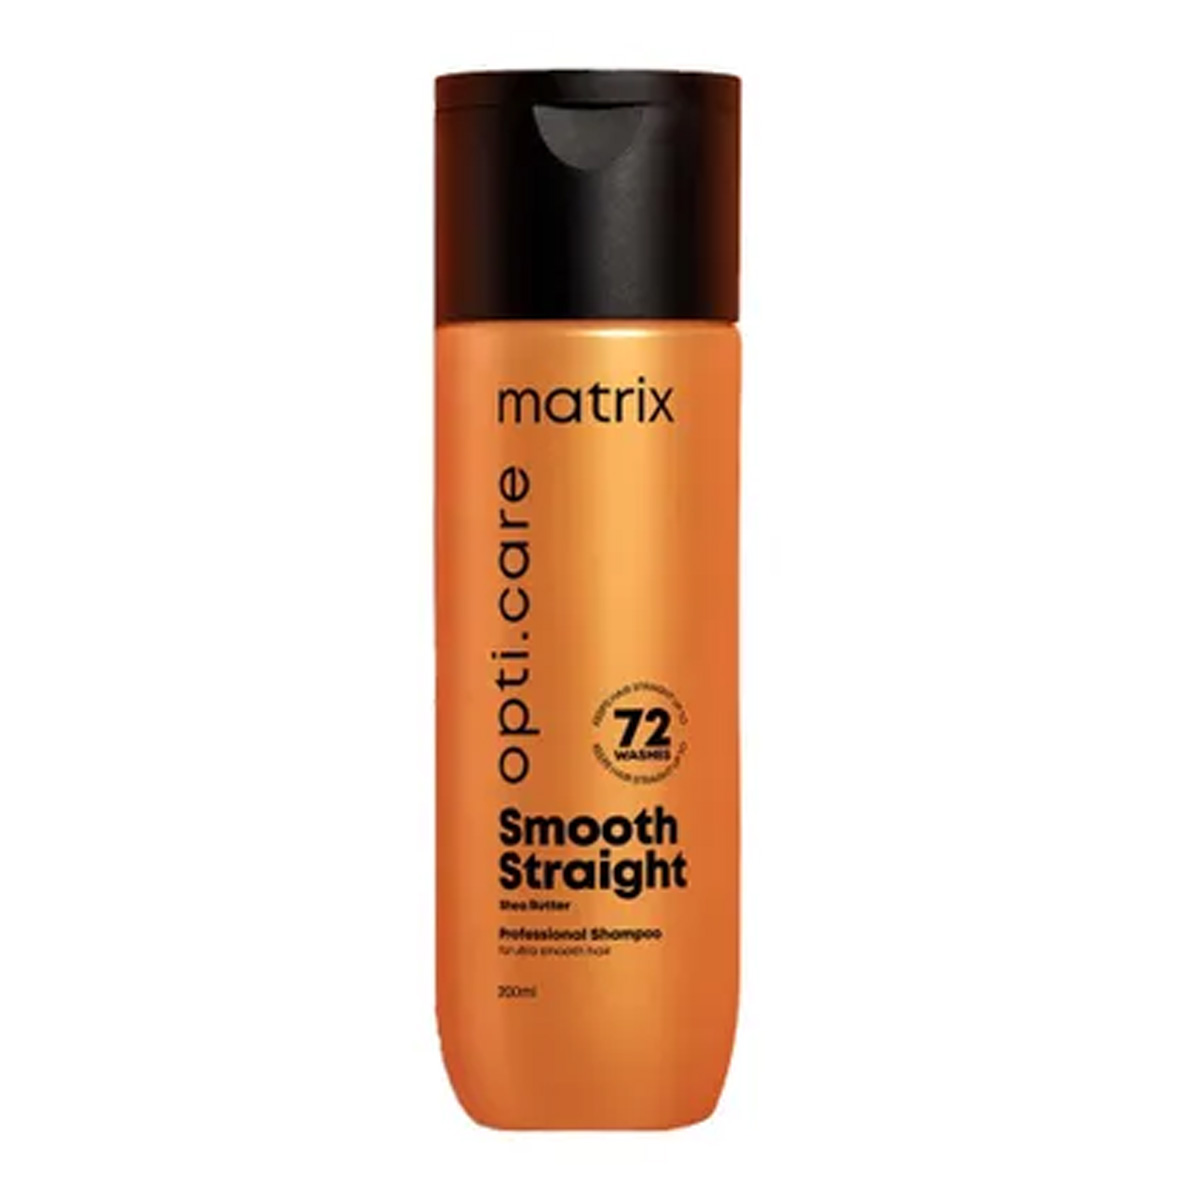 Matrix Opti.Care Professional Smooth Straight Shampoo, 200ml